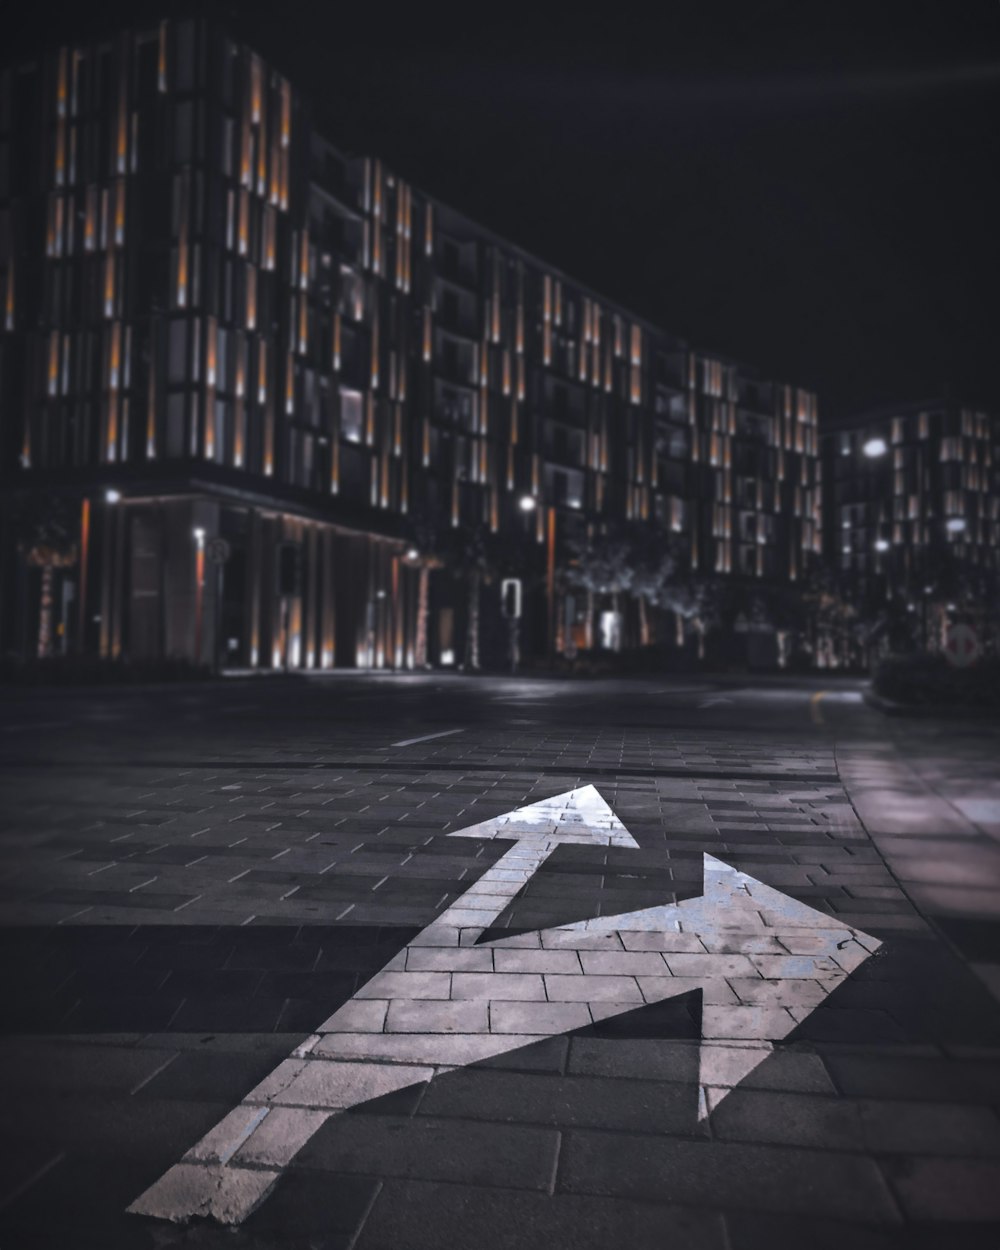 estrela cinza e branca imprimir estrada de concreto entre edifícios altos durante a noite